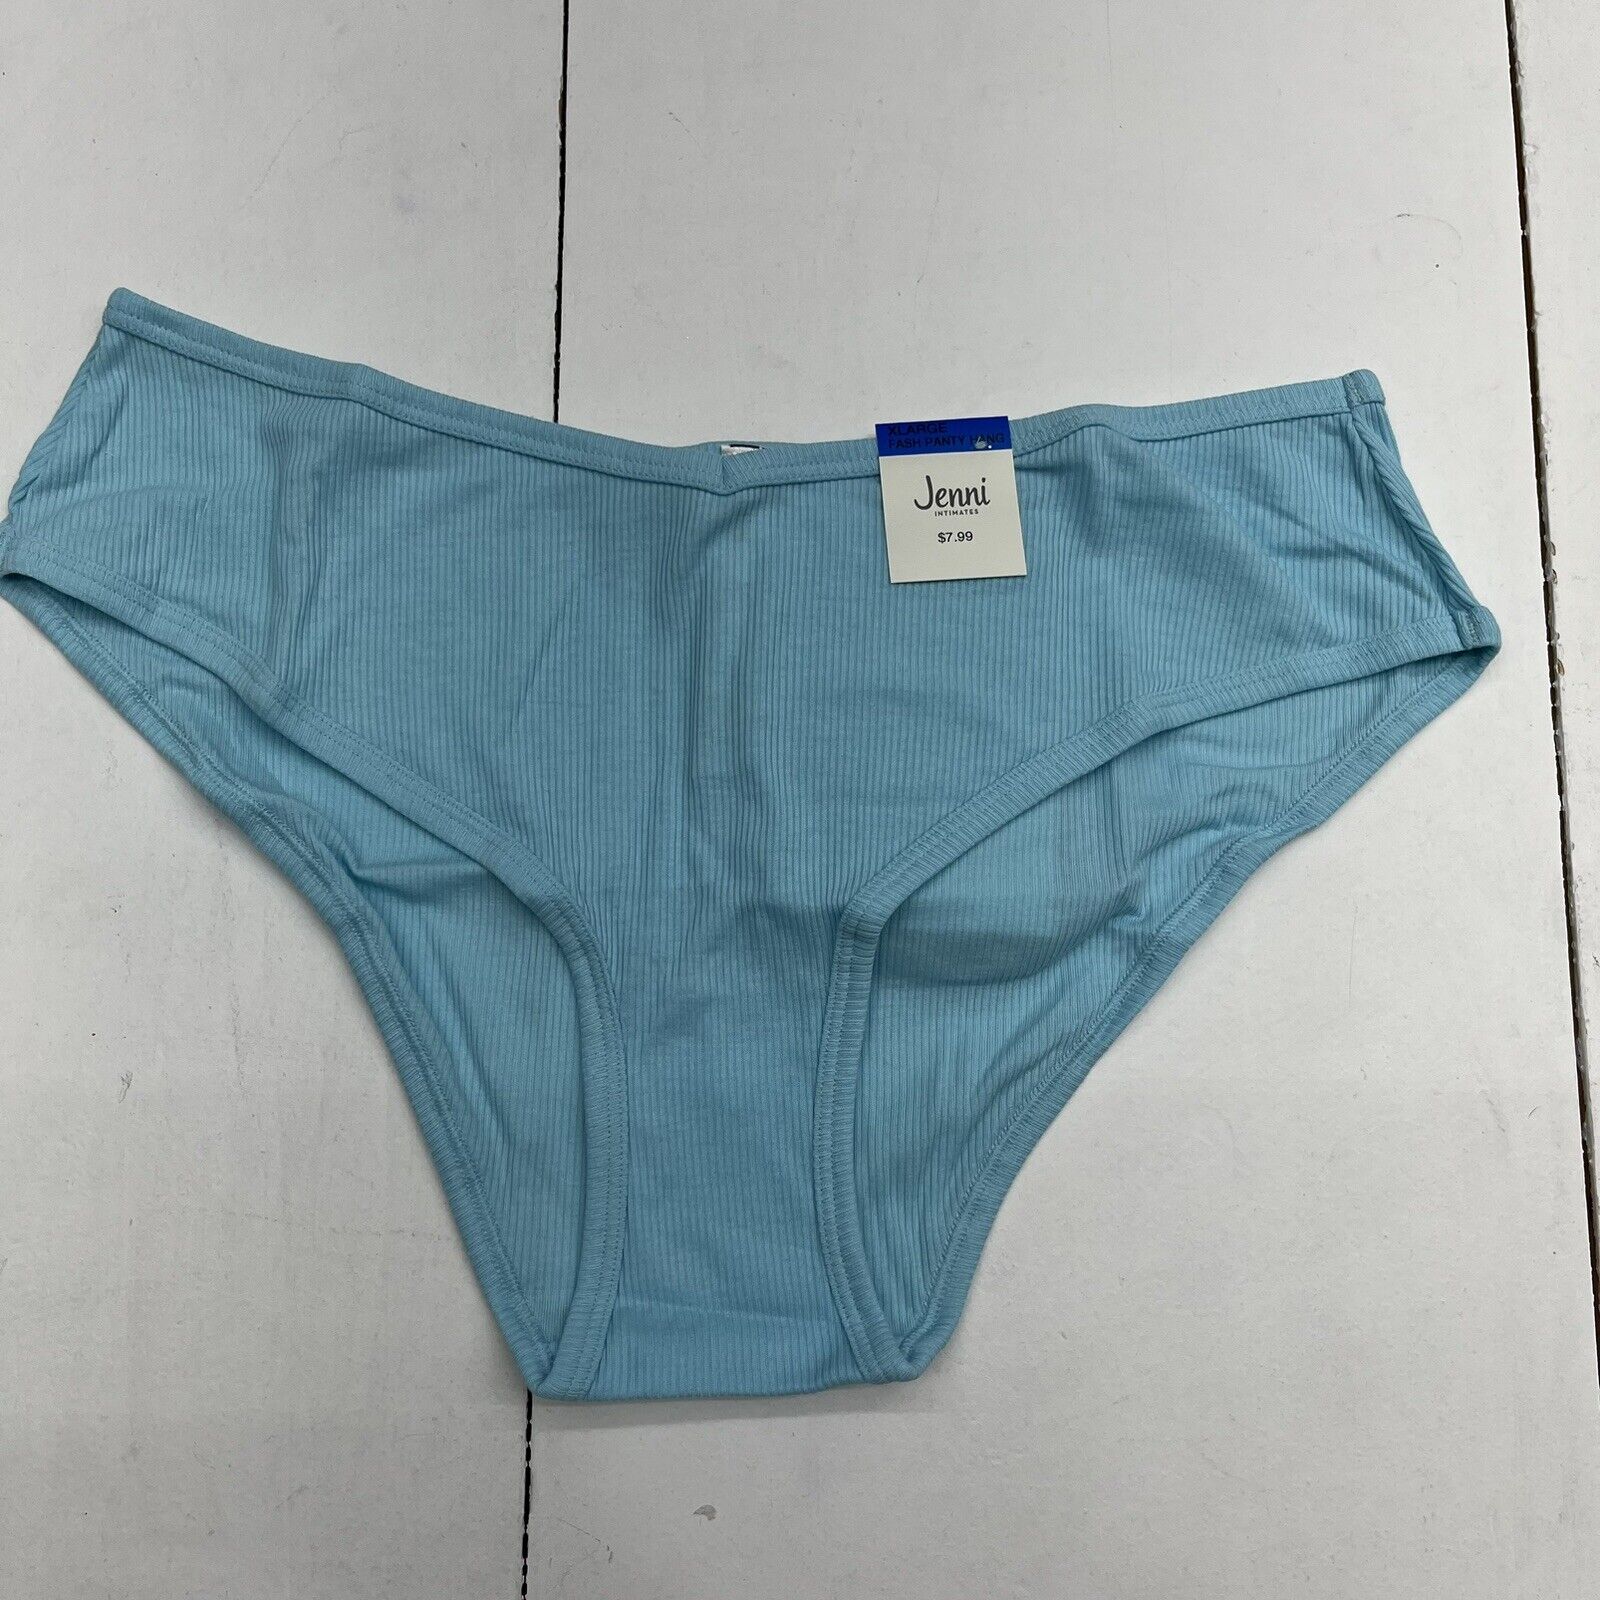 Jenni Intimates Caribbean Turquoise Bikini Panty Women's Size XL NEW -  beyond exchange